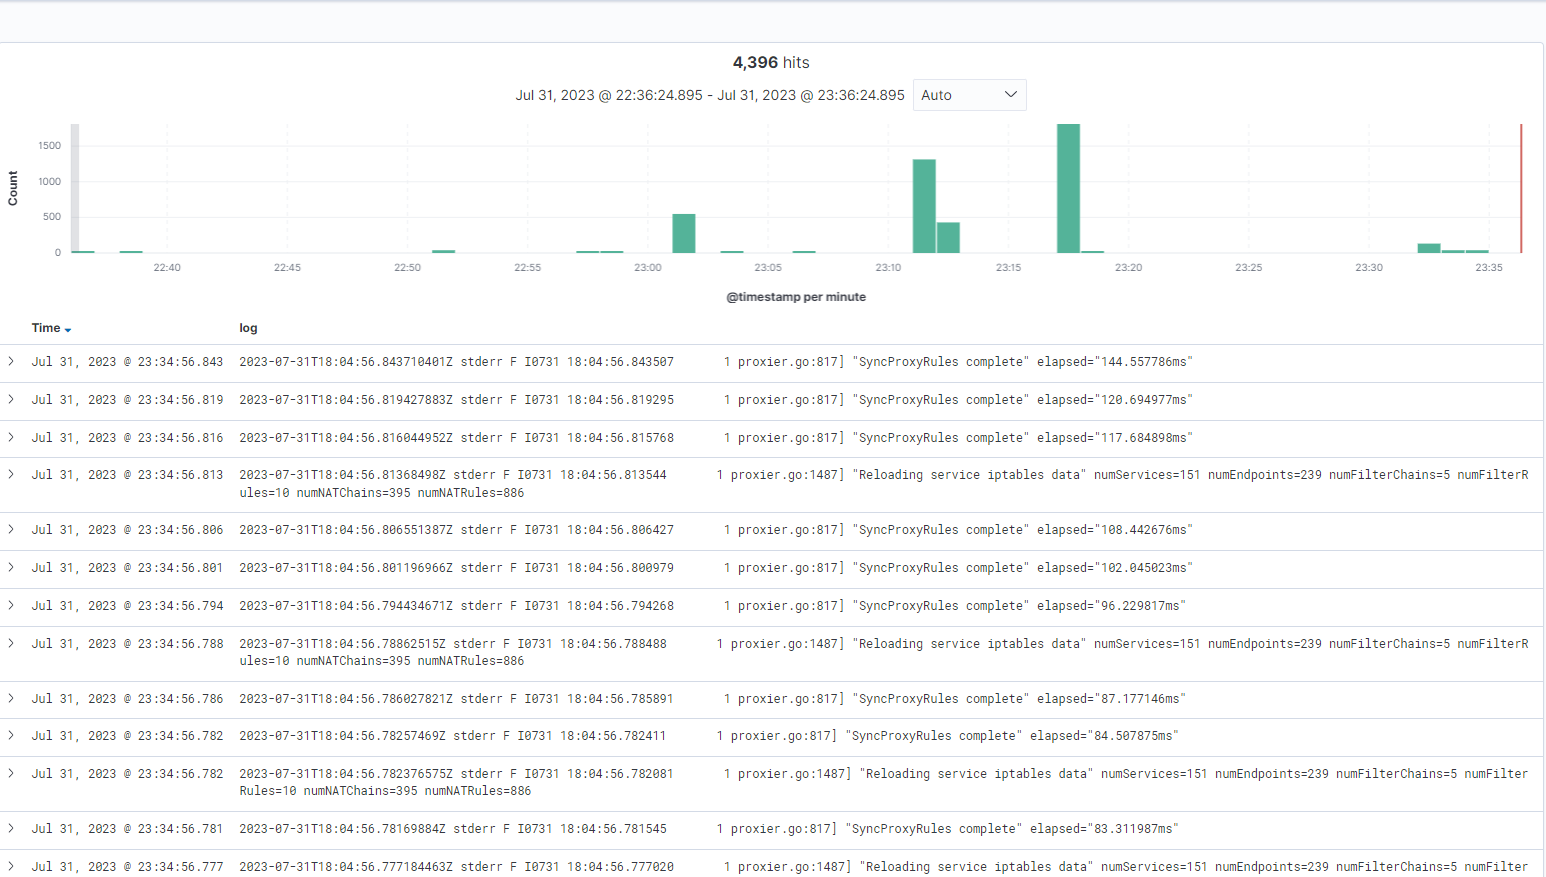 screenshot of Elastic dashboard showing logs flowing into Elasticsearch